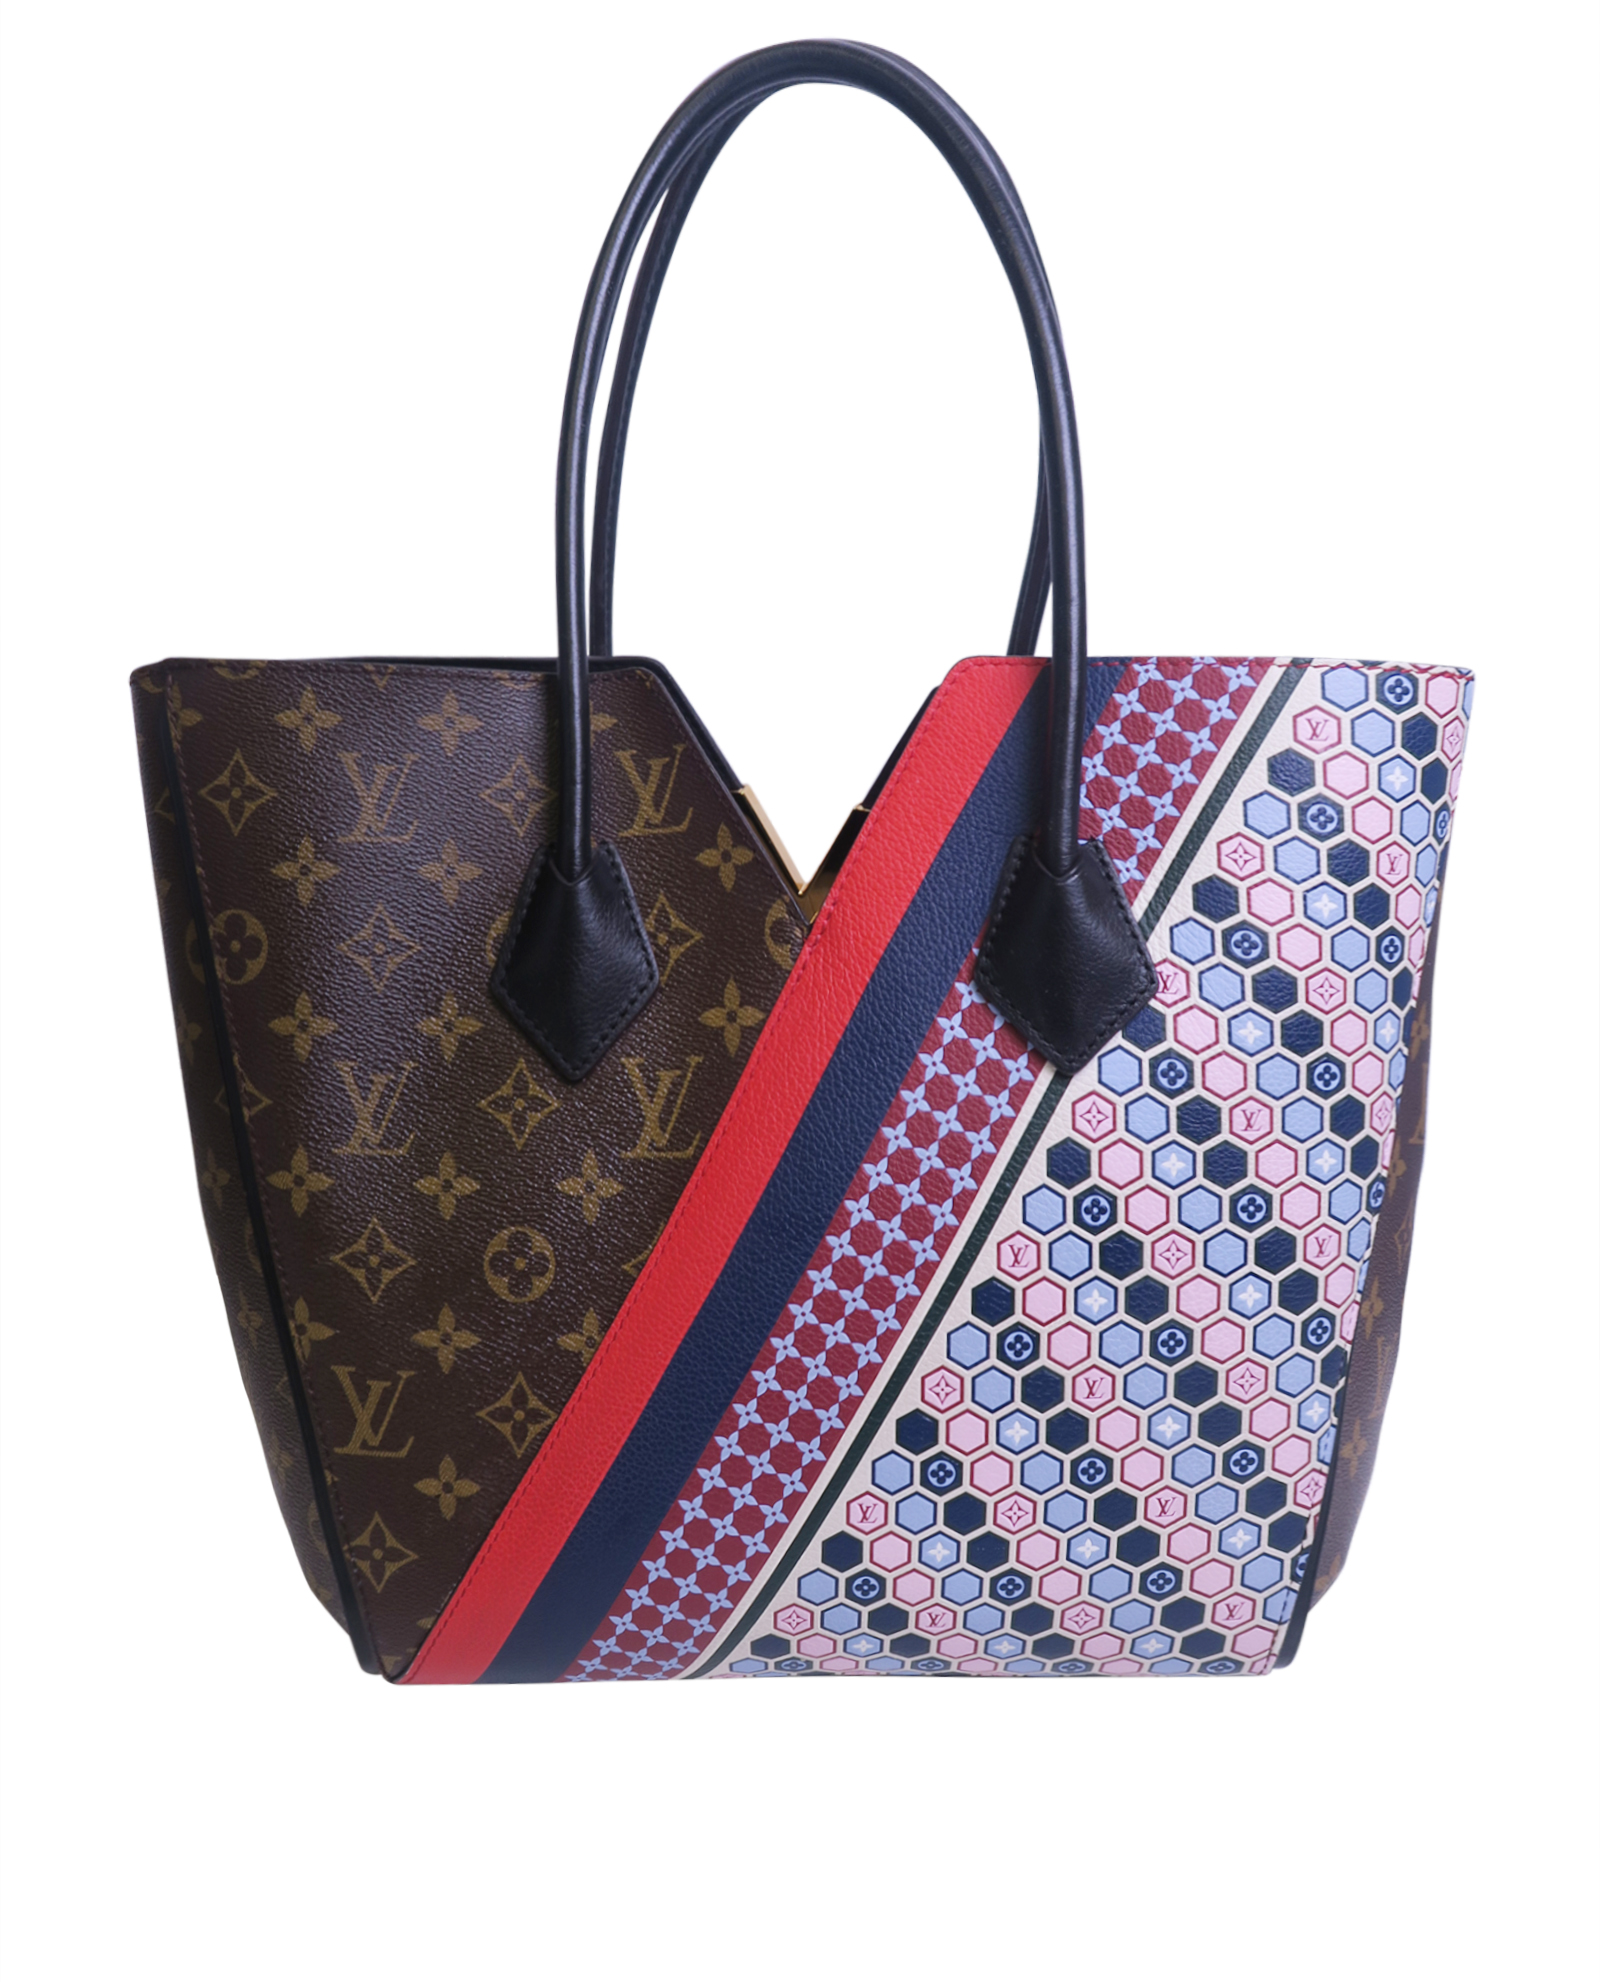 Louis Vuitton Kimono Bag Limited Edition Monogram Canvas and